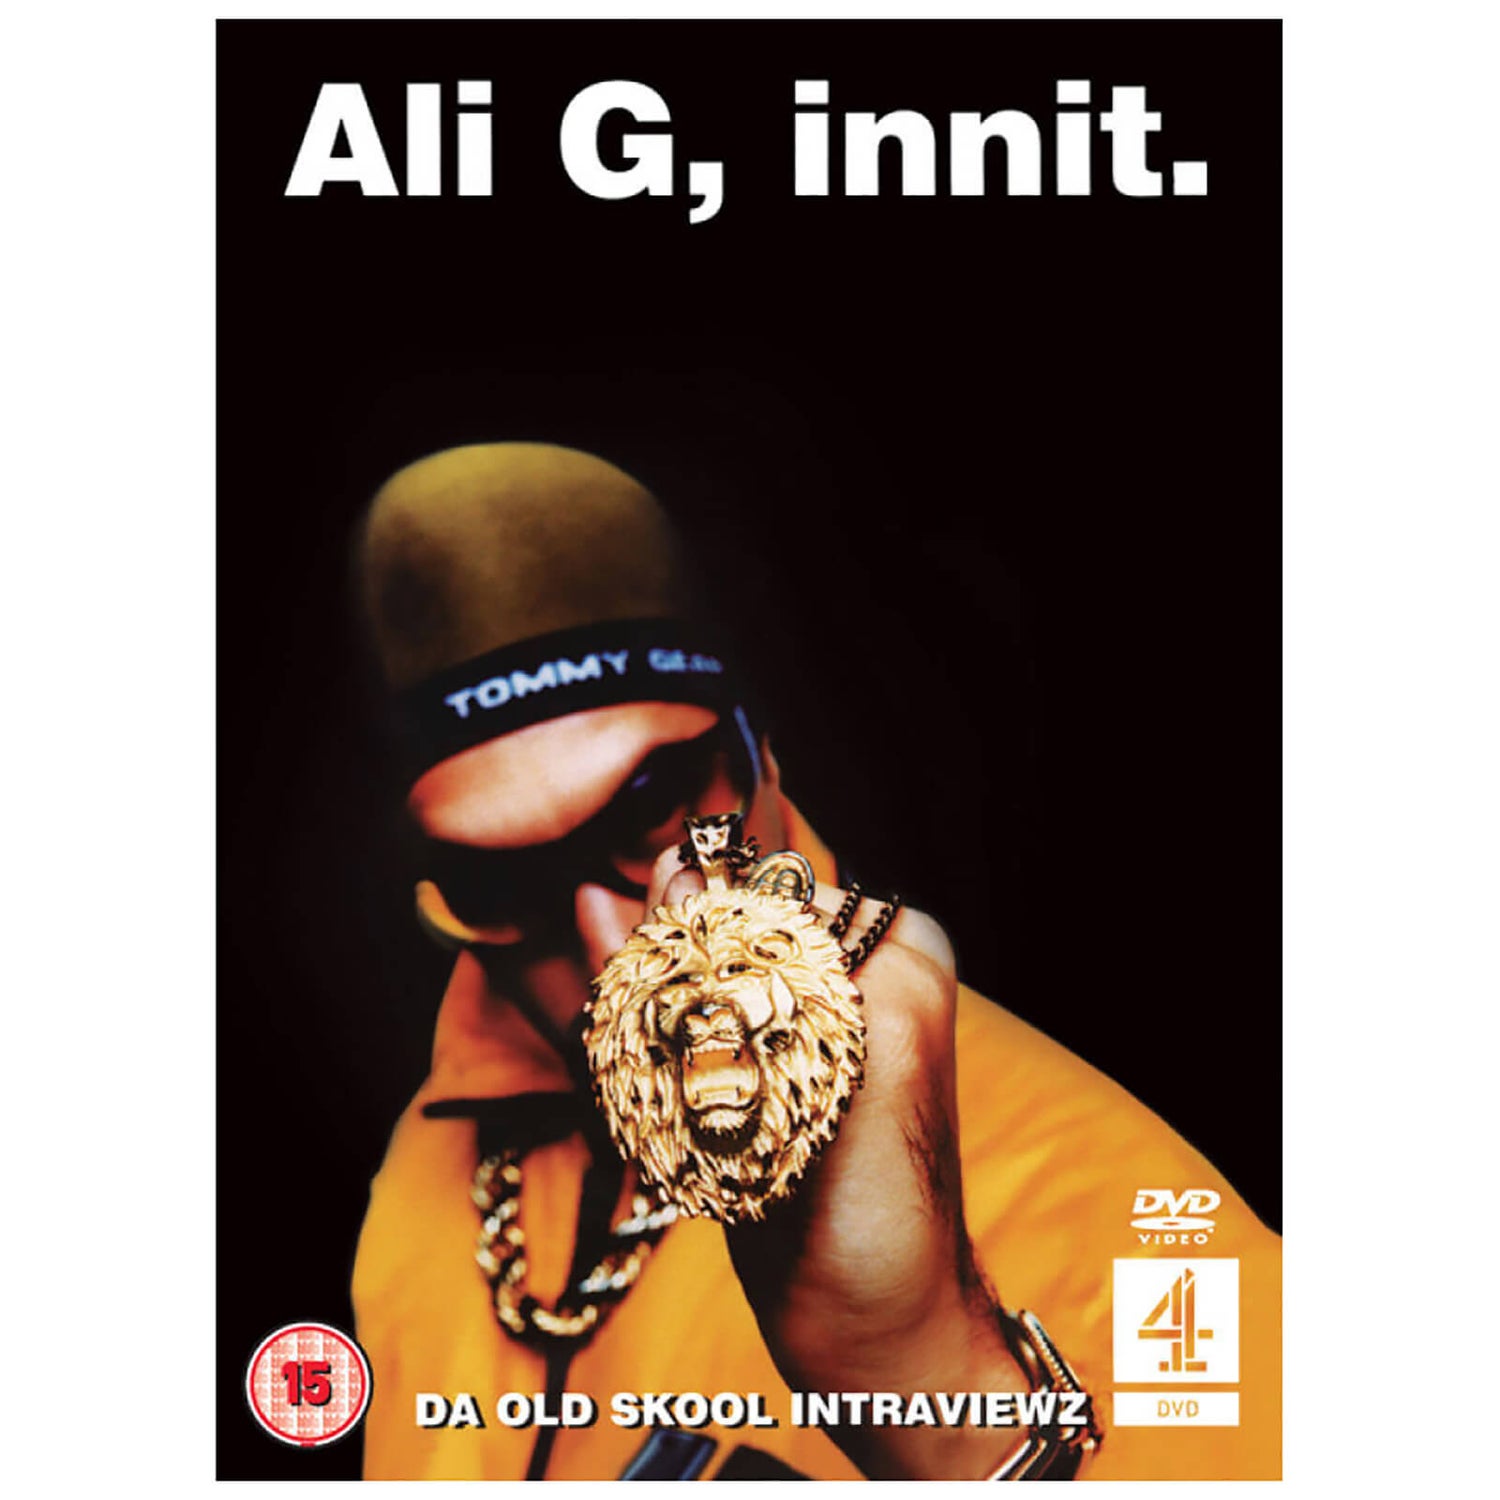 Ali G, Innit.